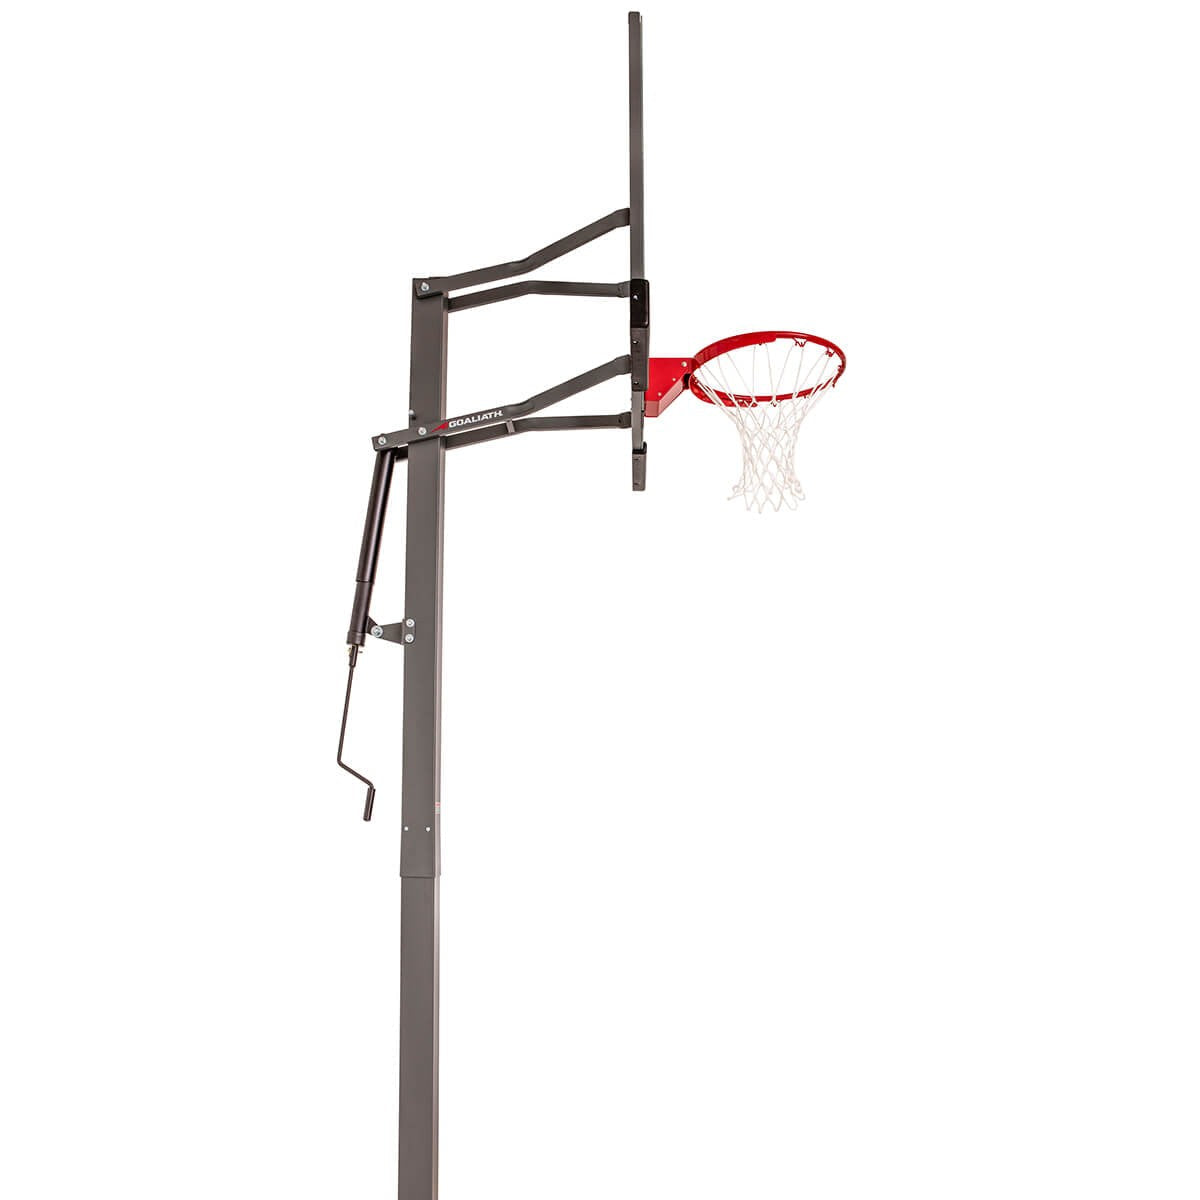 Goaliath GB50 In-Ground Basketball Hoop System